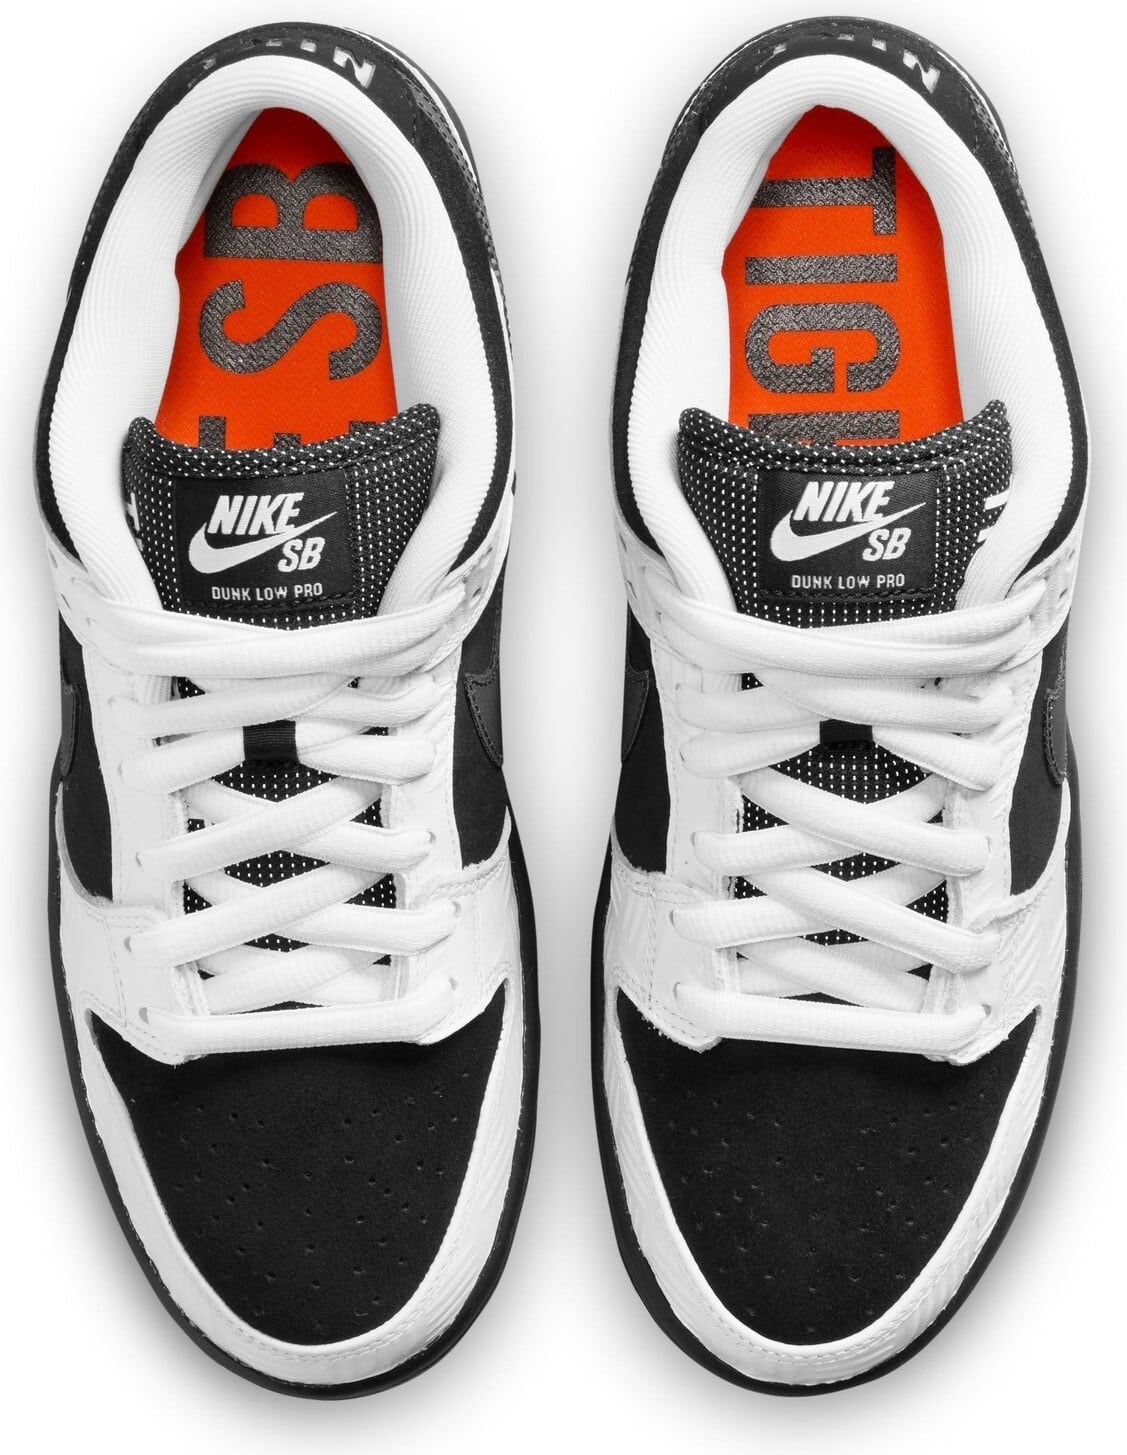 Nike SB Dunk Low Pro Black/White